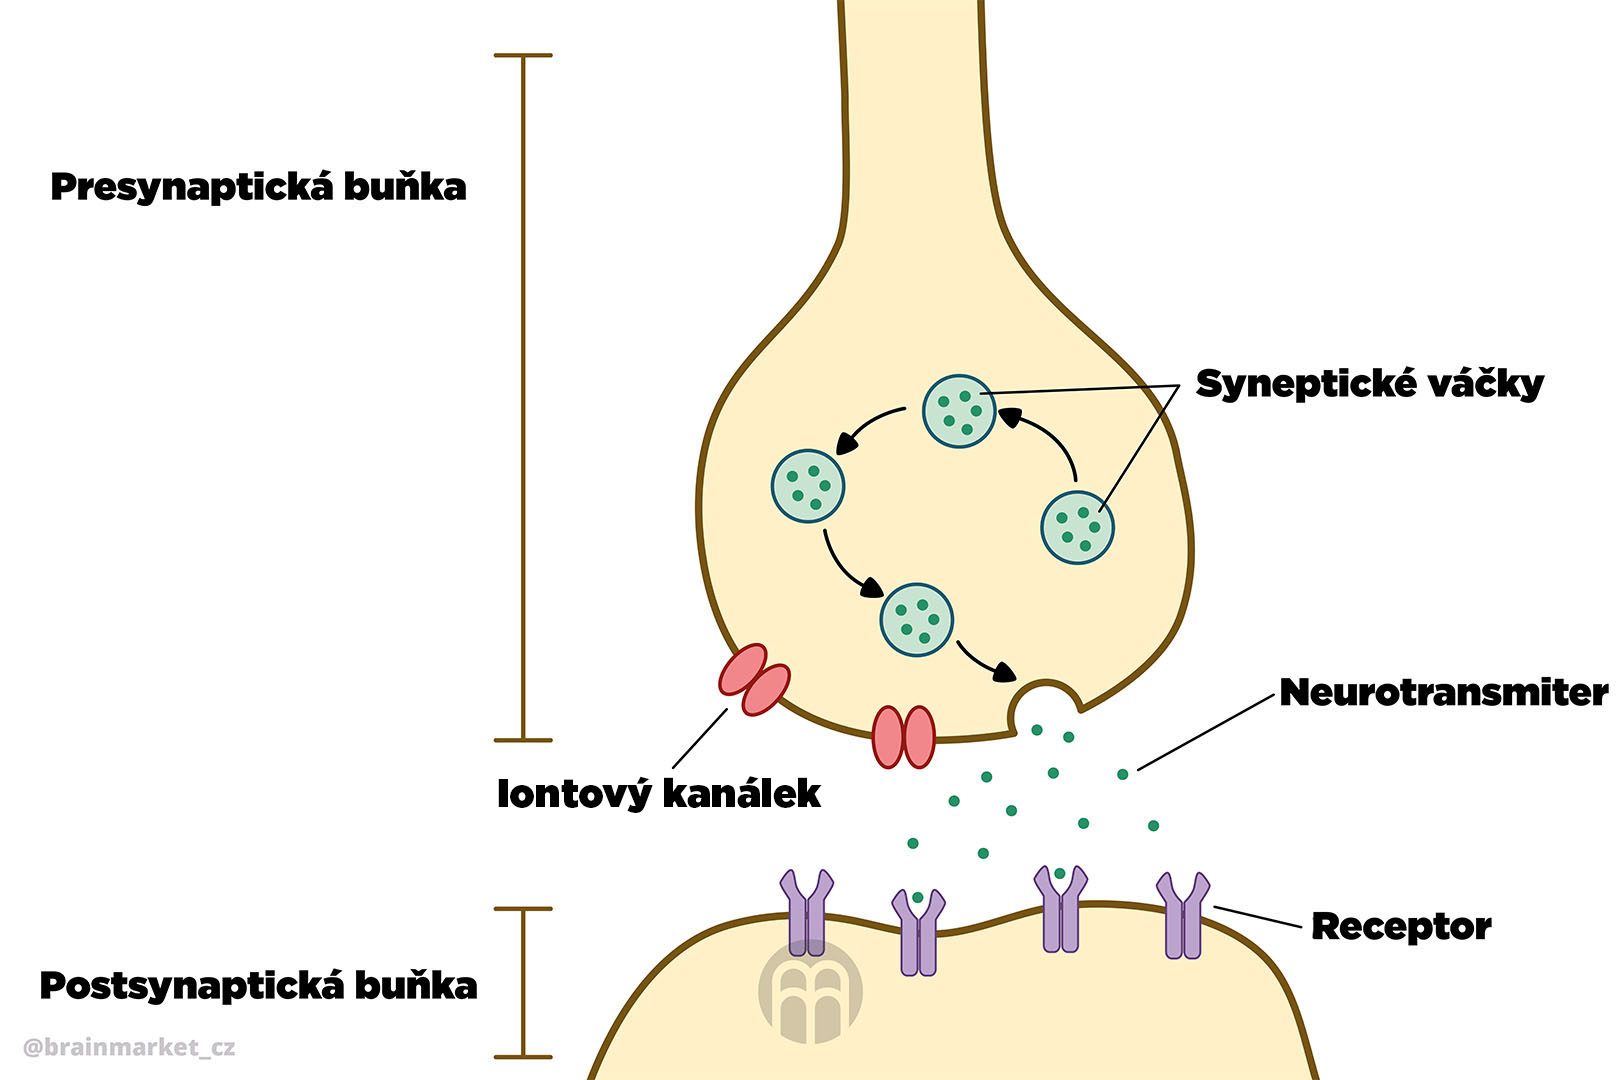 Synapse_and_neurotransmitter_diagram_infografika_brainmarket_CZ